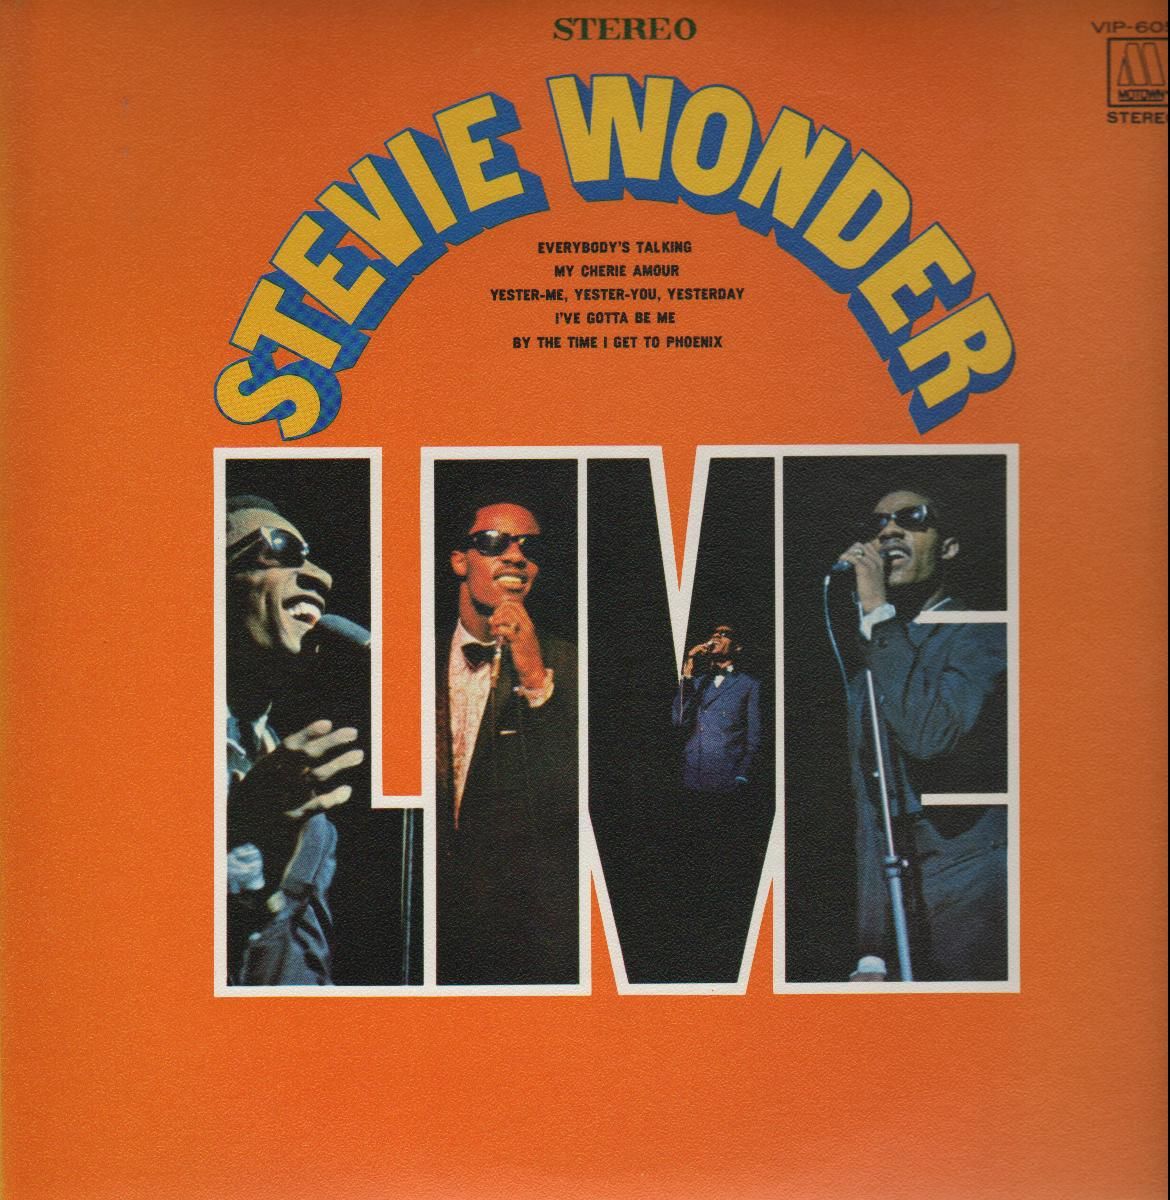 Bobby Hebb - The tribute to the genius: April 27 Stevie Wonder LIVE Sunny